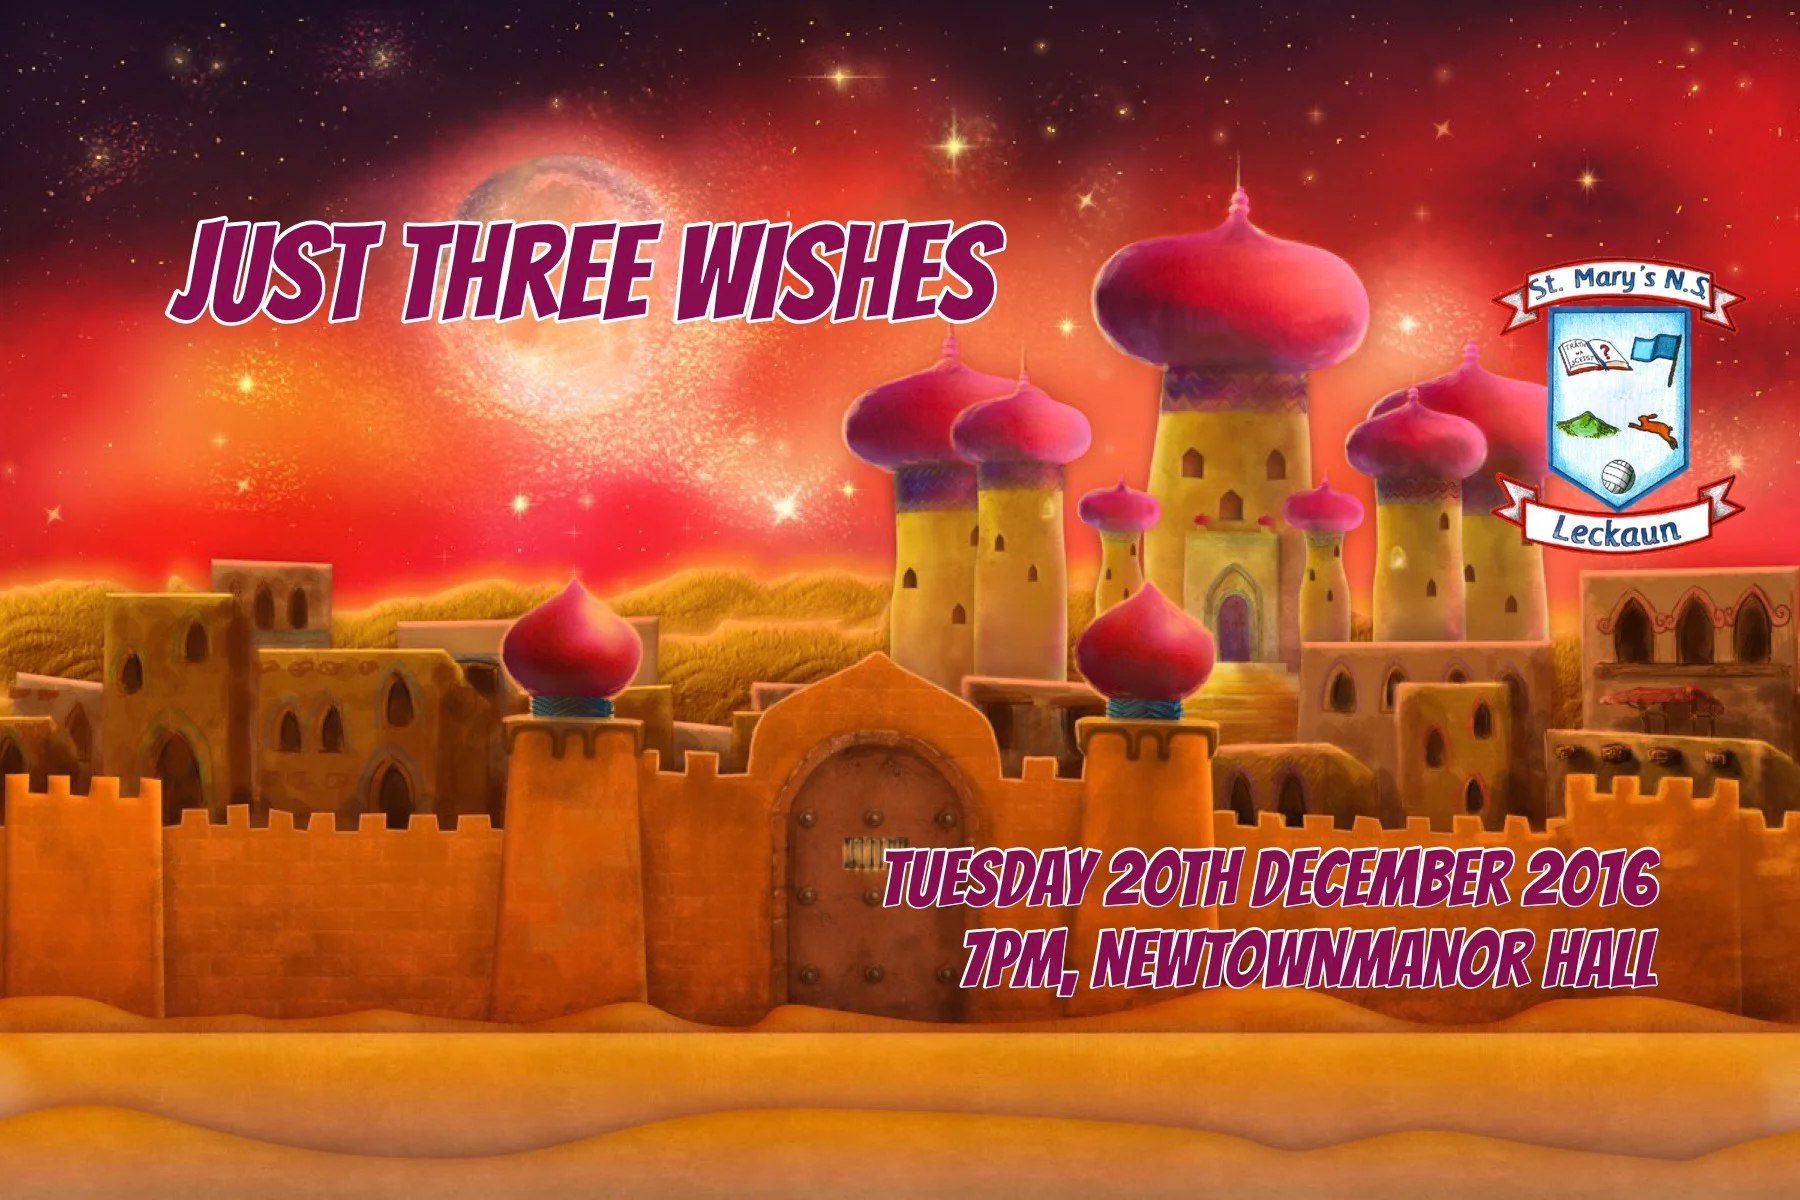 Aladdin Trouble - Just Three Wishes on Vimeo